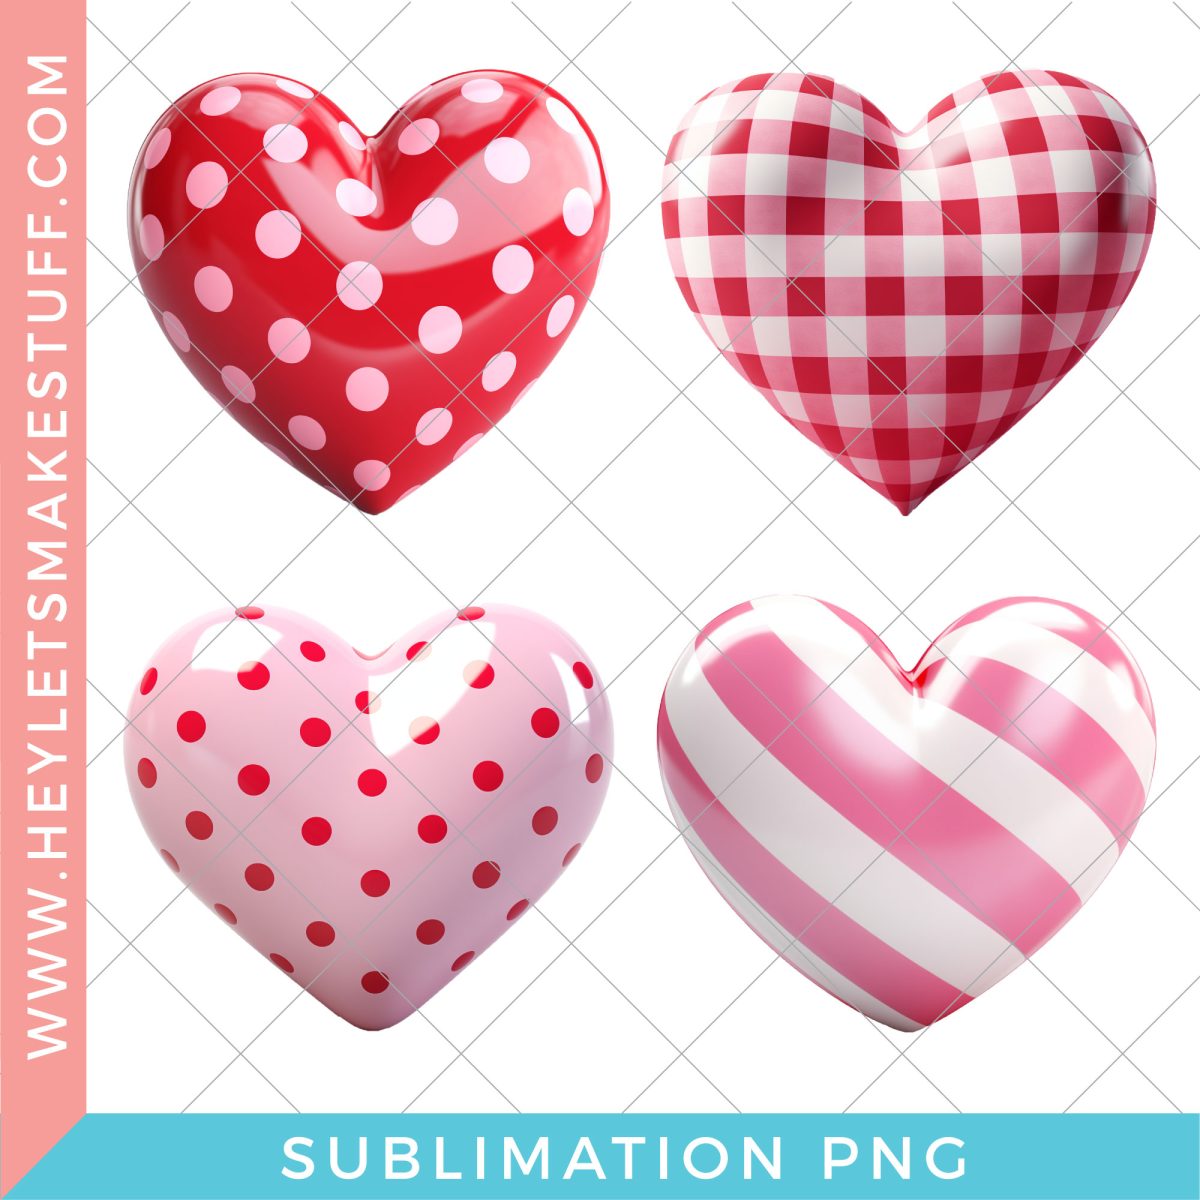 Four sublimation hearts